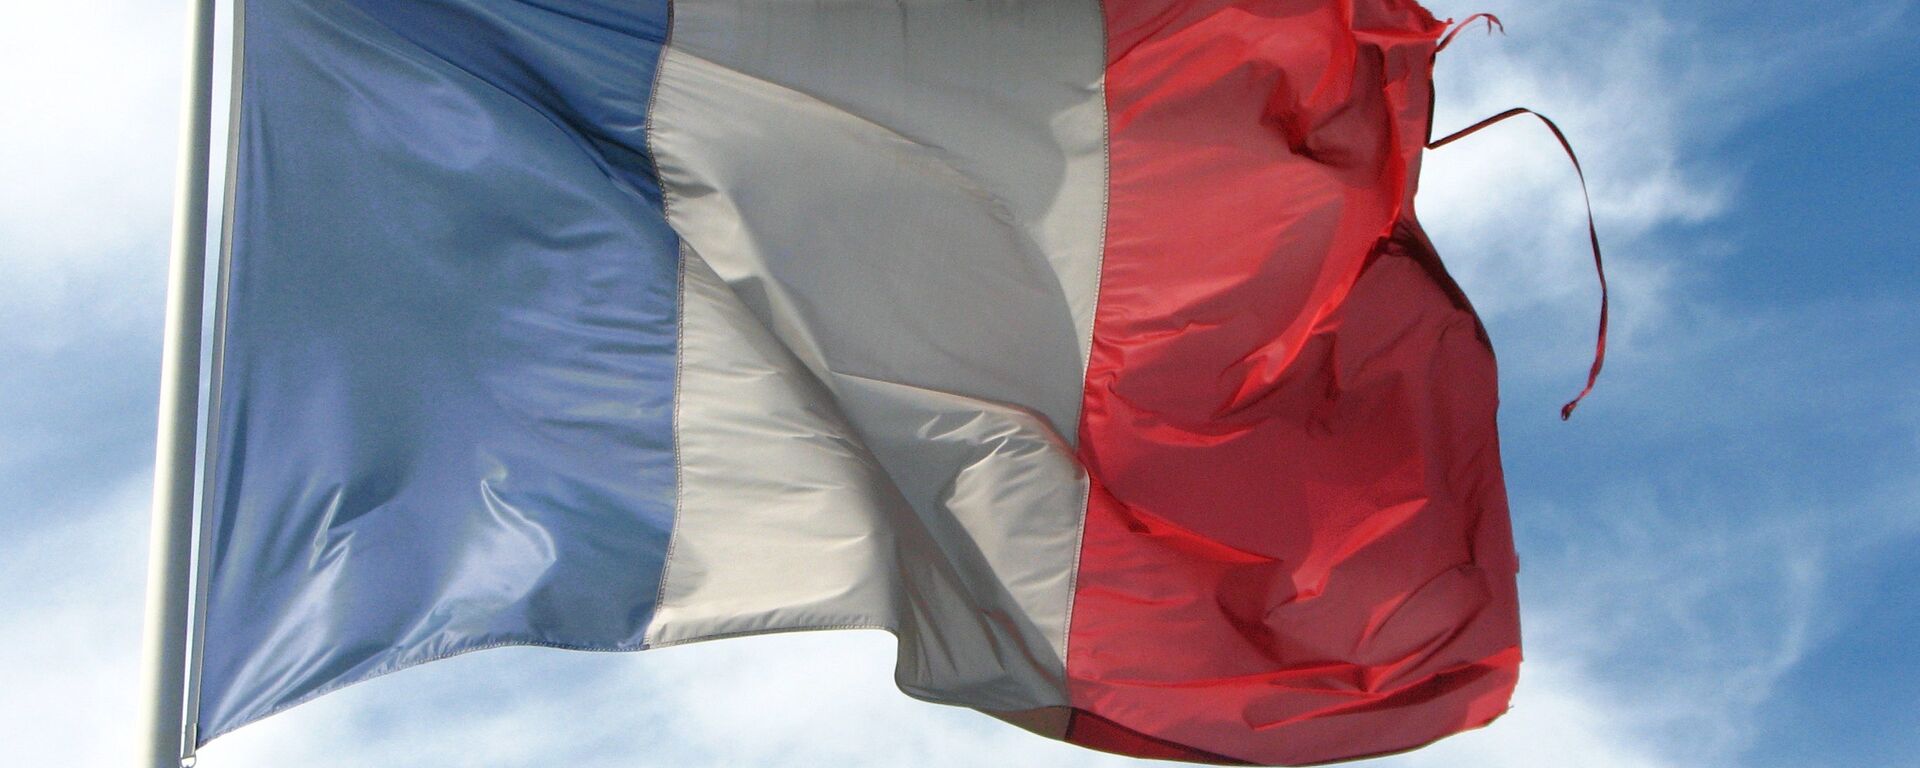 La bandera de Francia - Sputnik Mundo, 1920, 17.07.2021